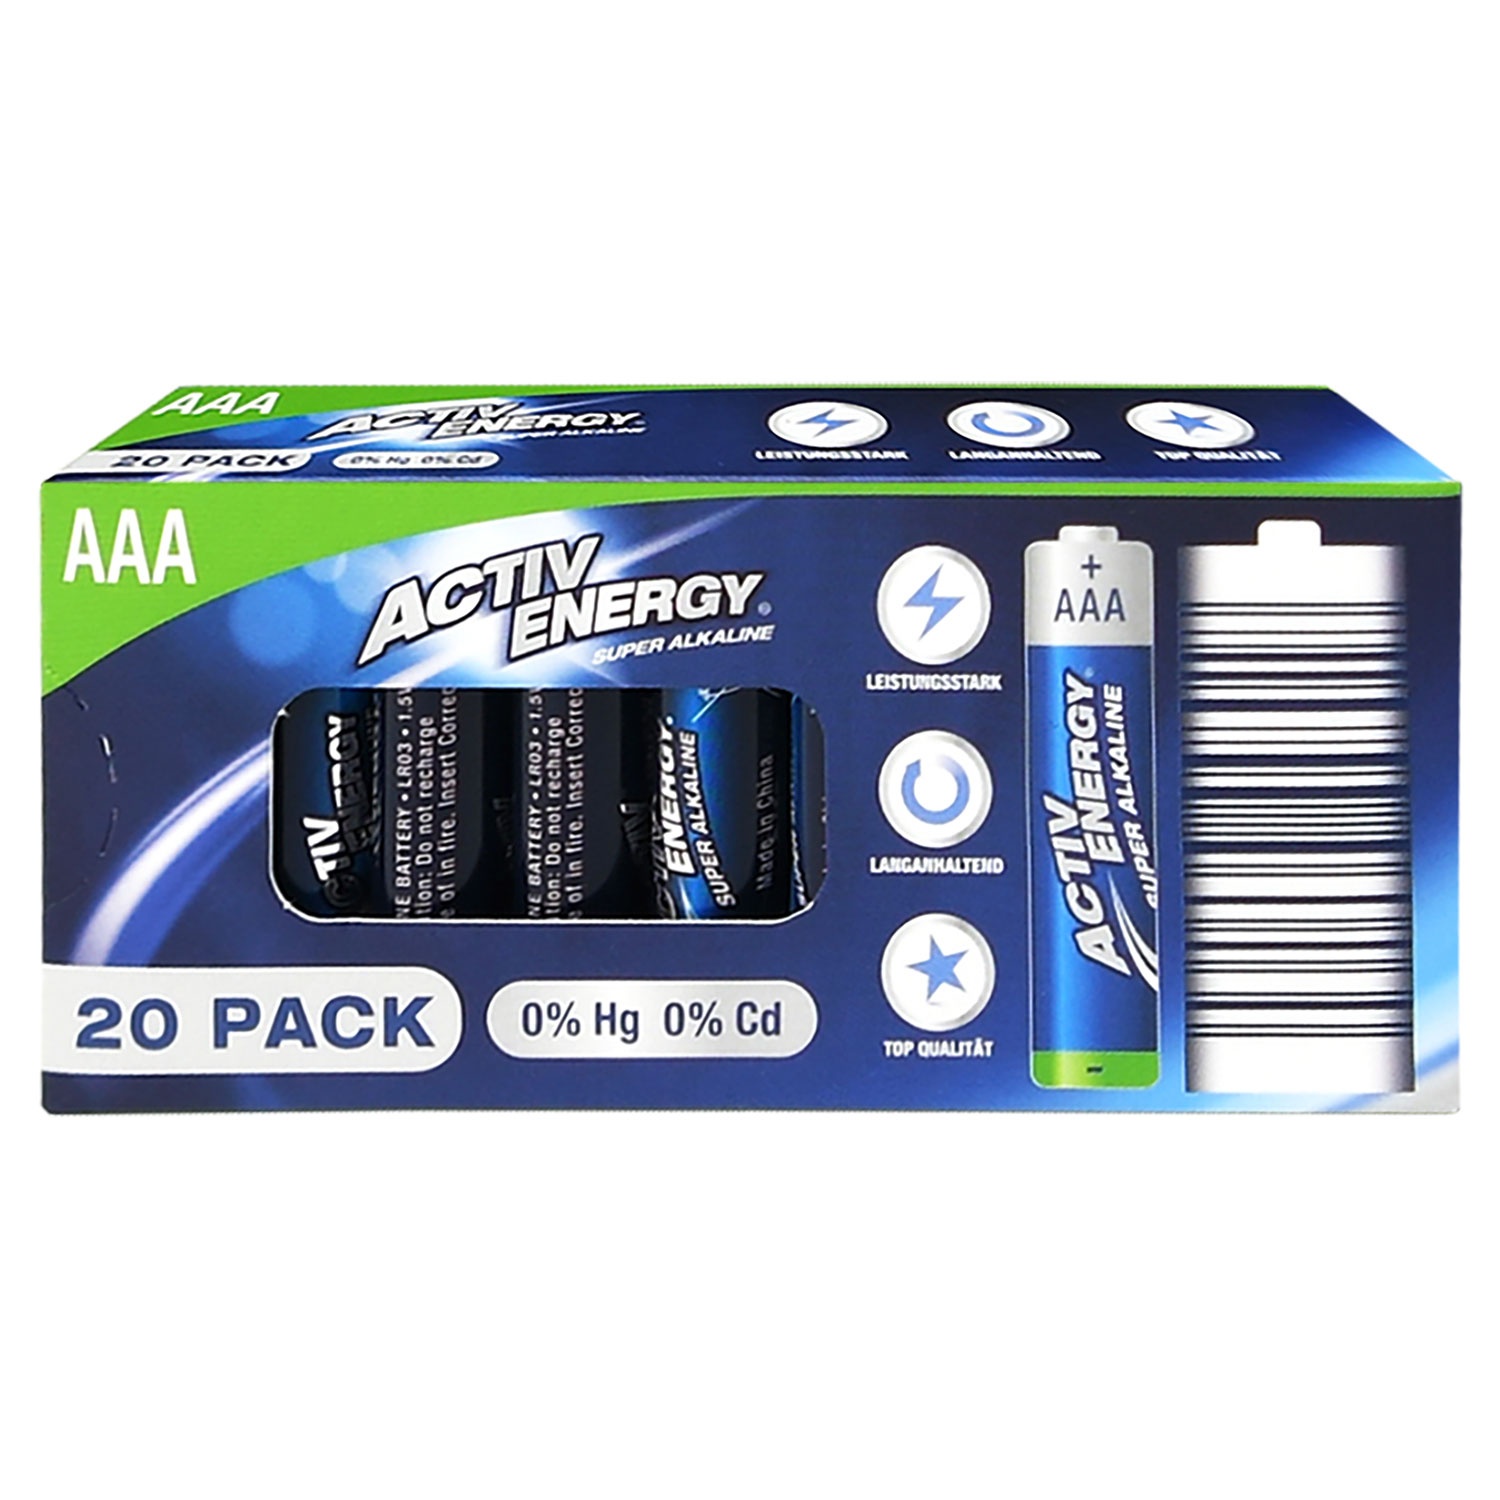 ACTIV ENERGY Batterien, AA oder AAA, 20er-Packung